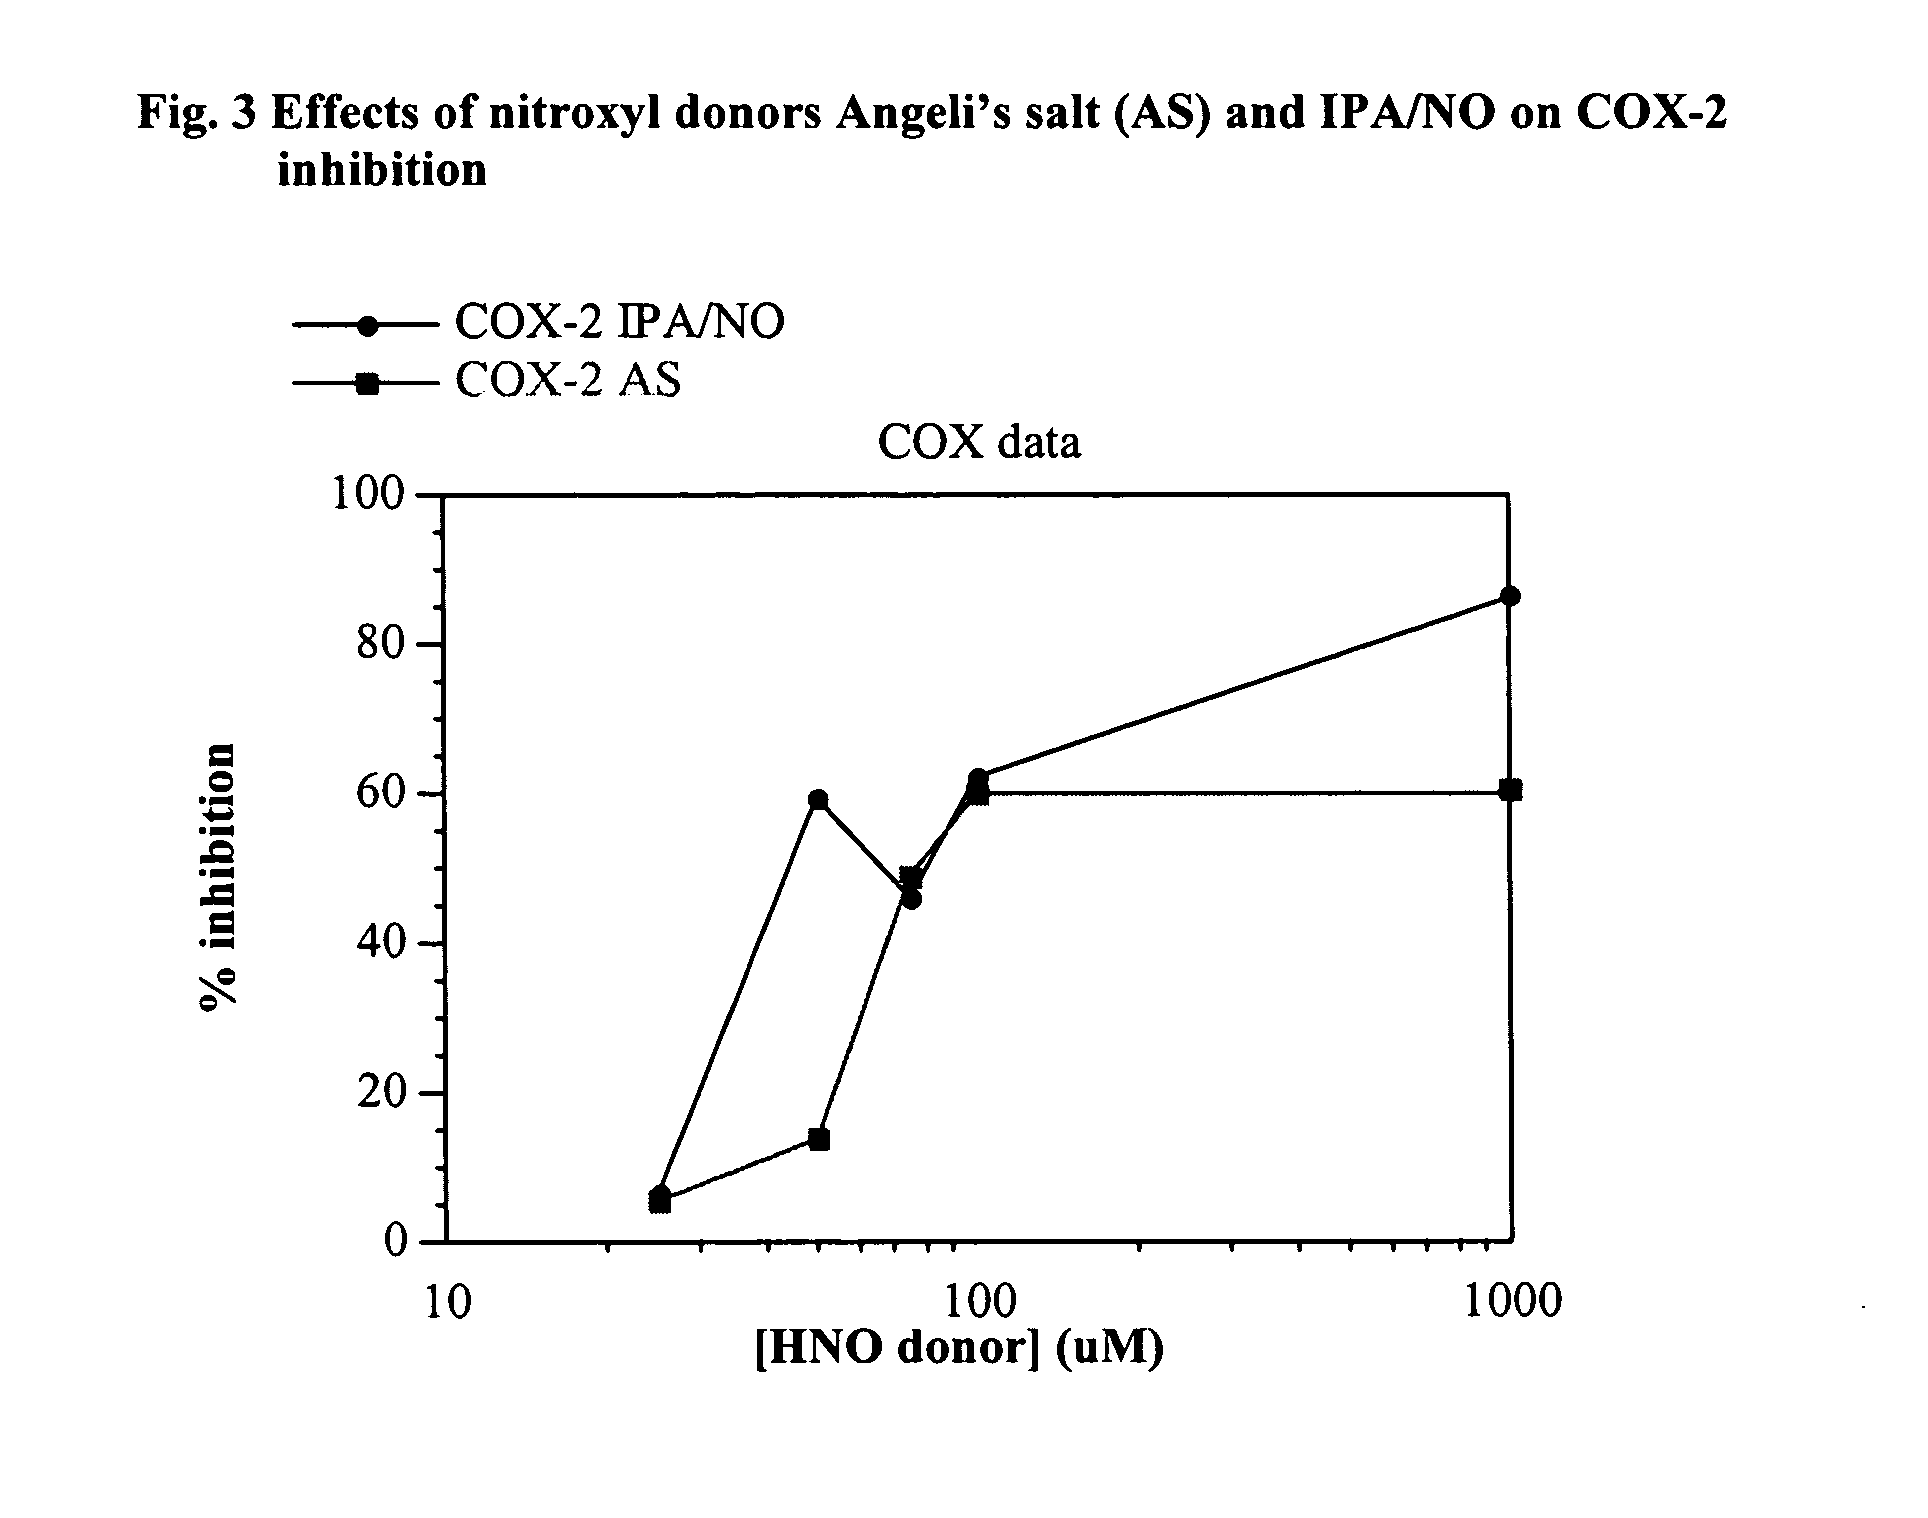 Cyclooxygenase inhibition with nitroxyl